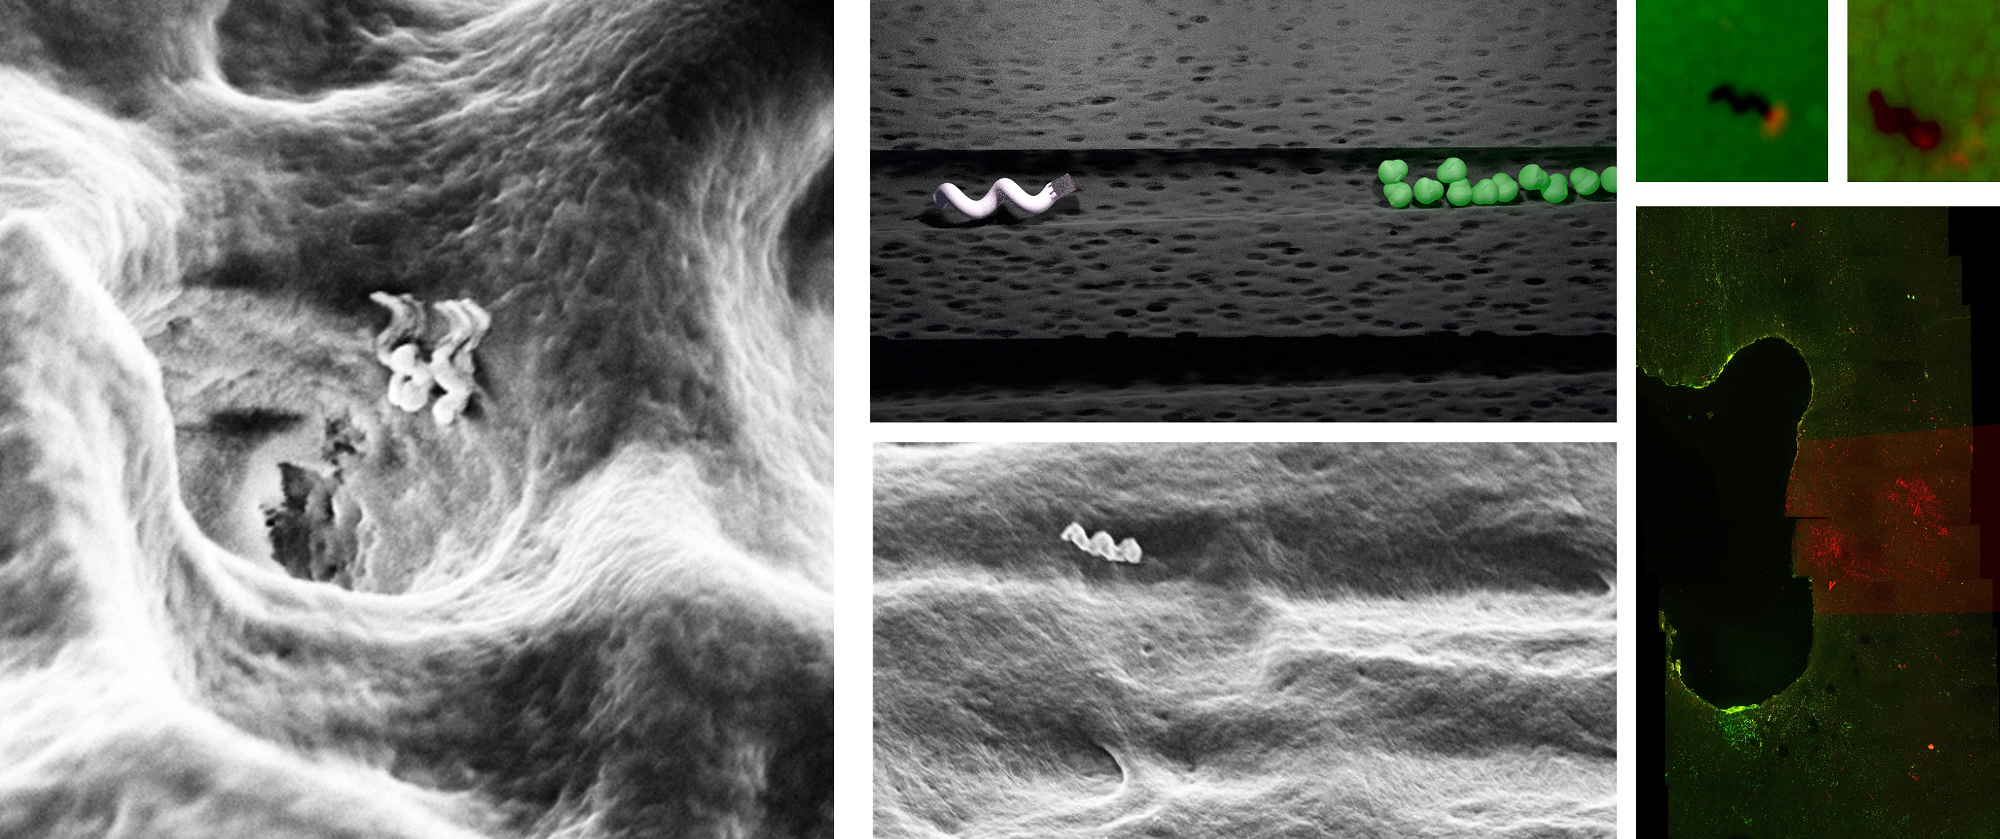 Nanobots entering a dentinal tubule